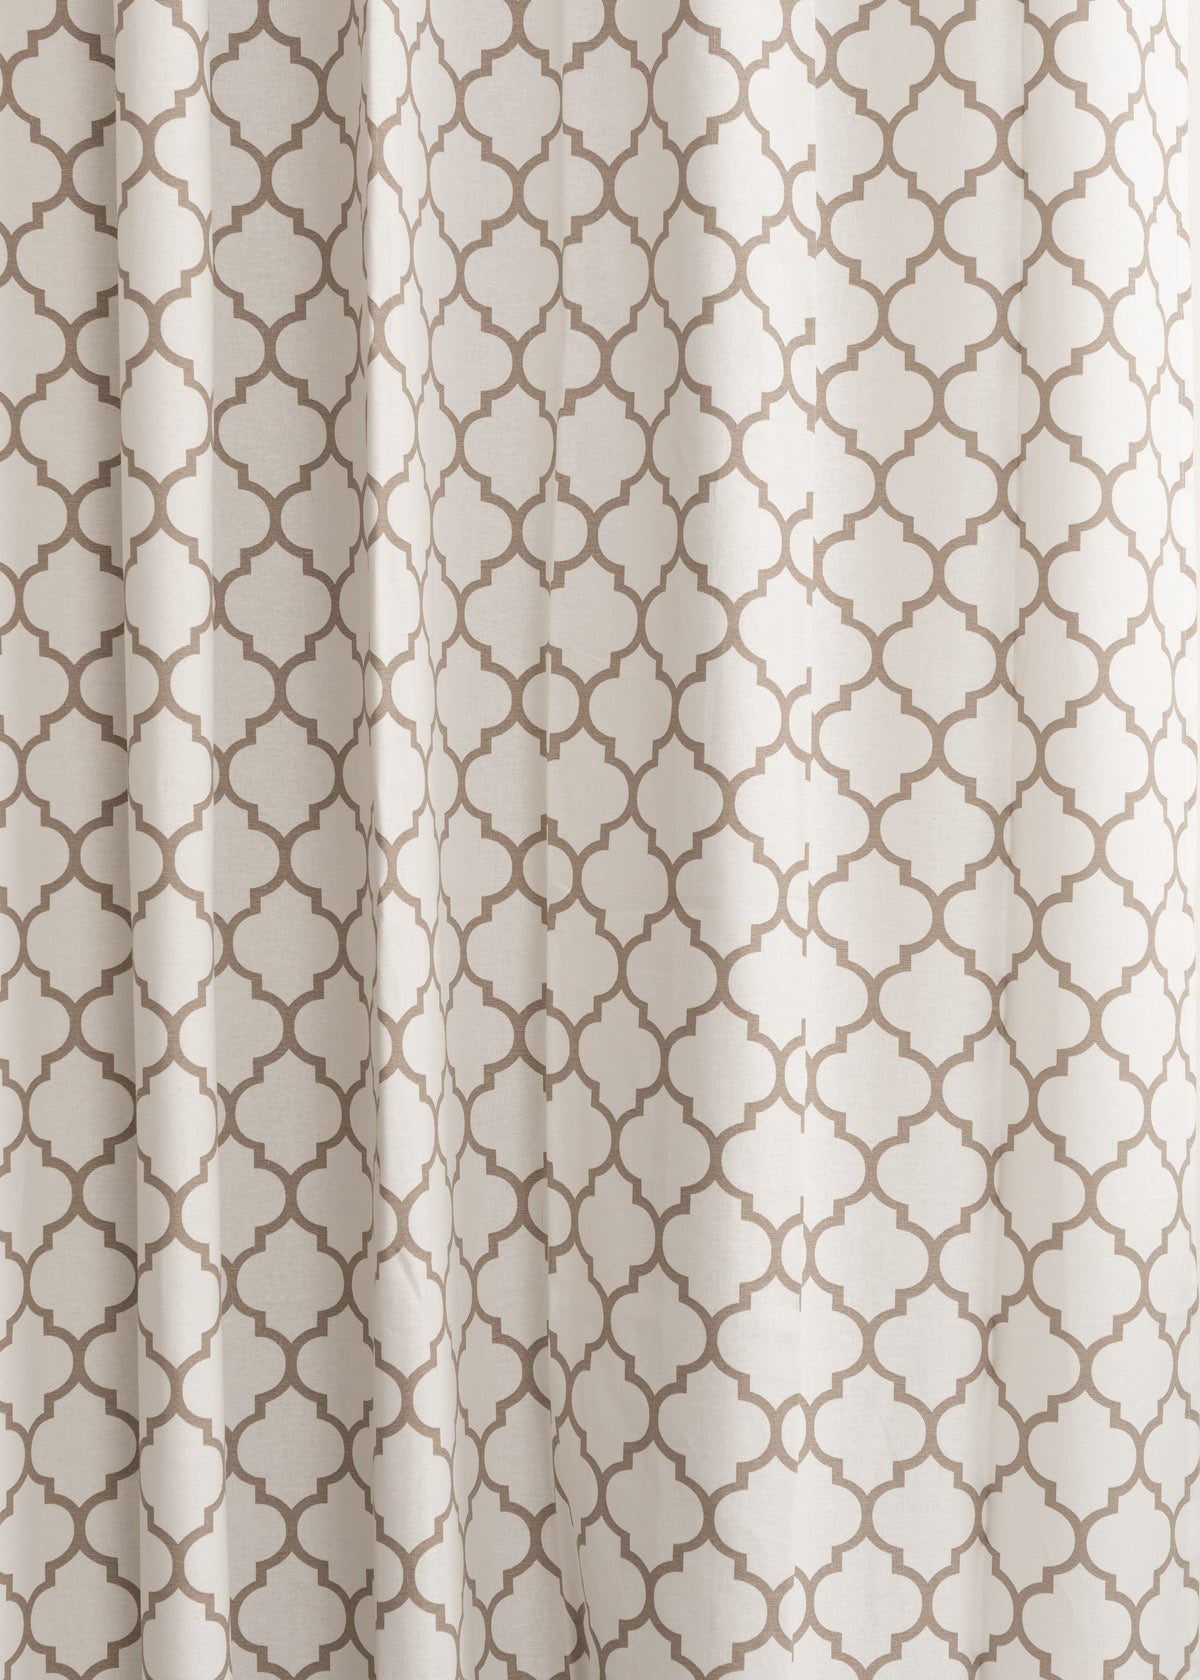 Trellis Printed 100% Customizable Cotton geometric curtain for bed room - Room darkening - Walnut Grey